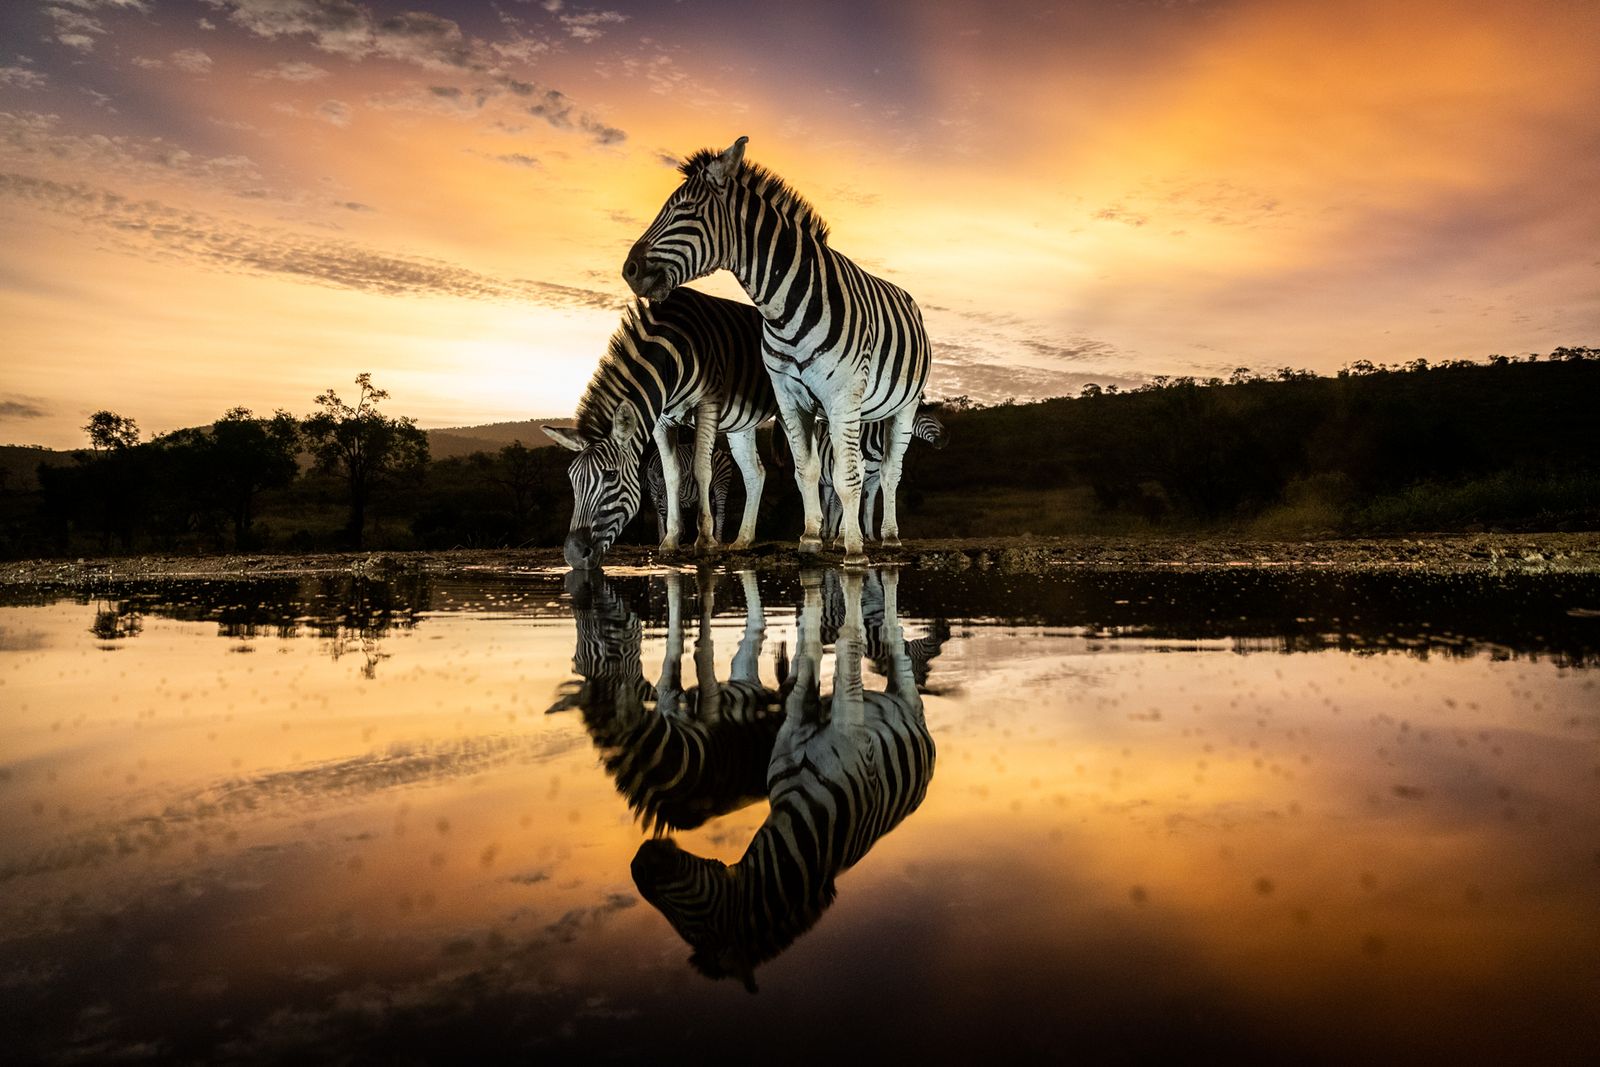 Zebra at sunset